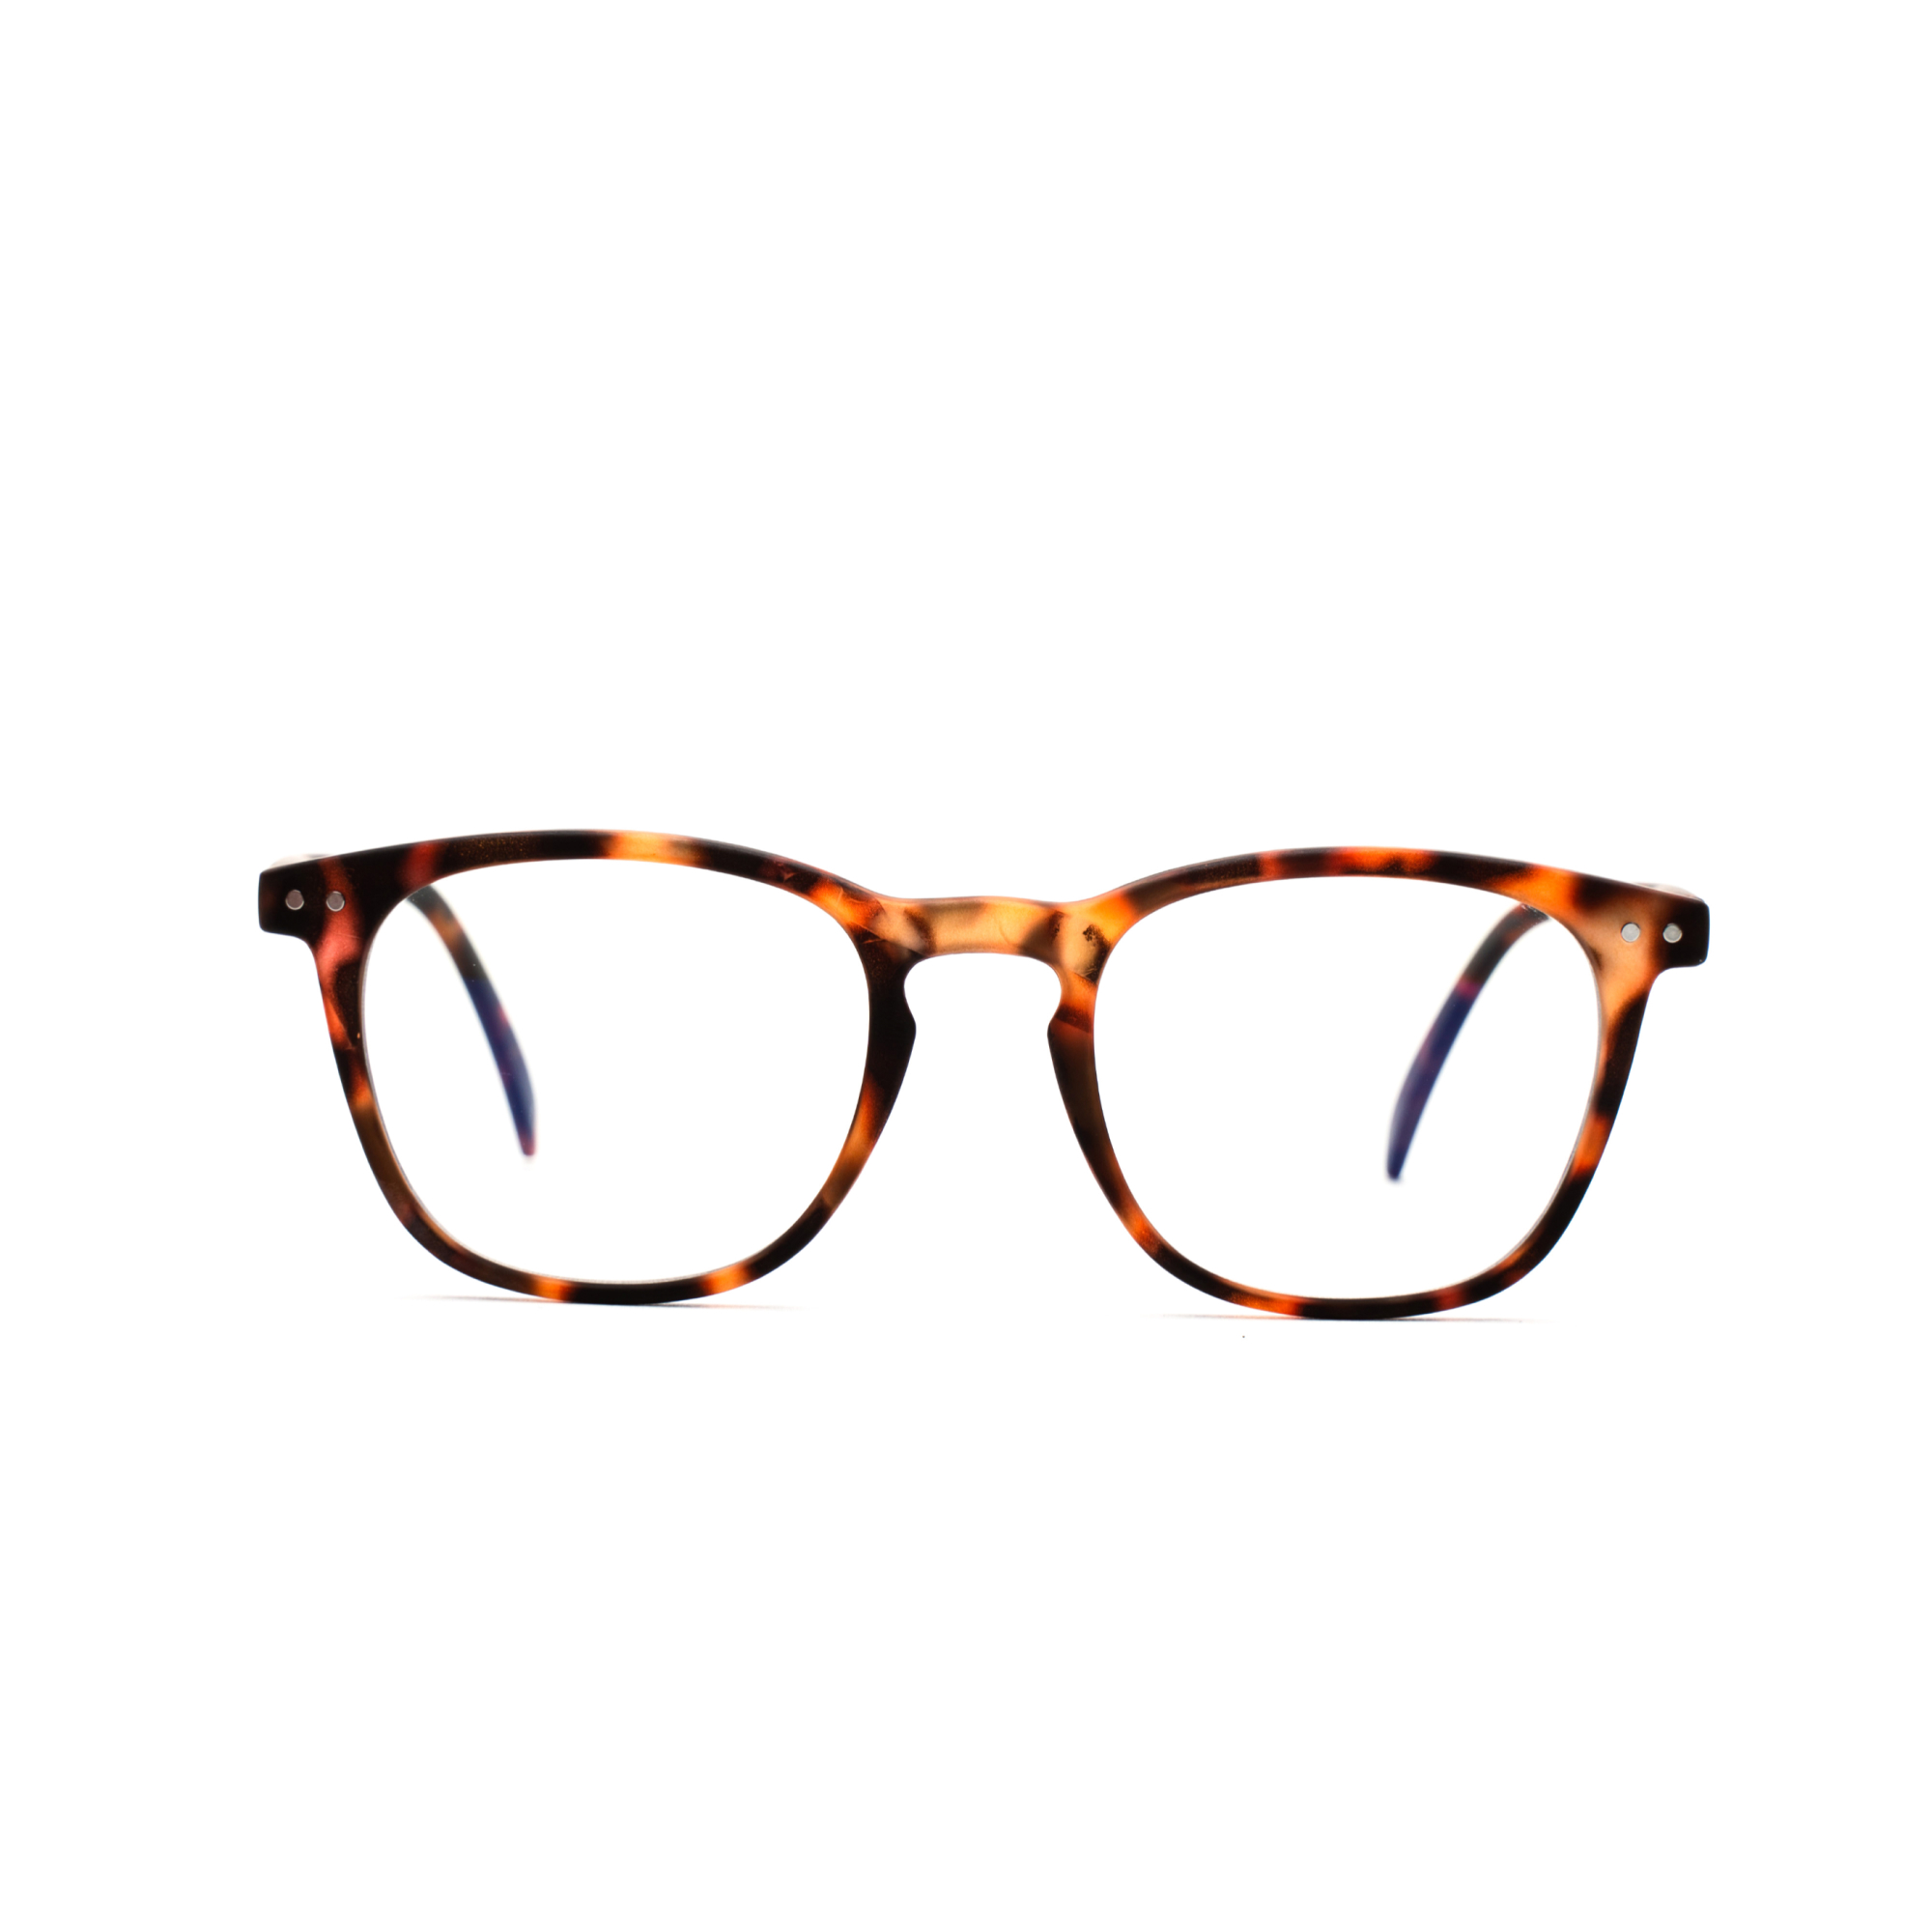 Men's reading glasses – William Ultimate m - Tortoise